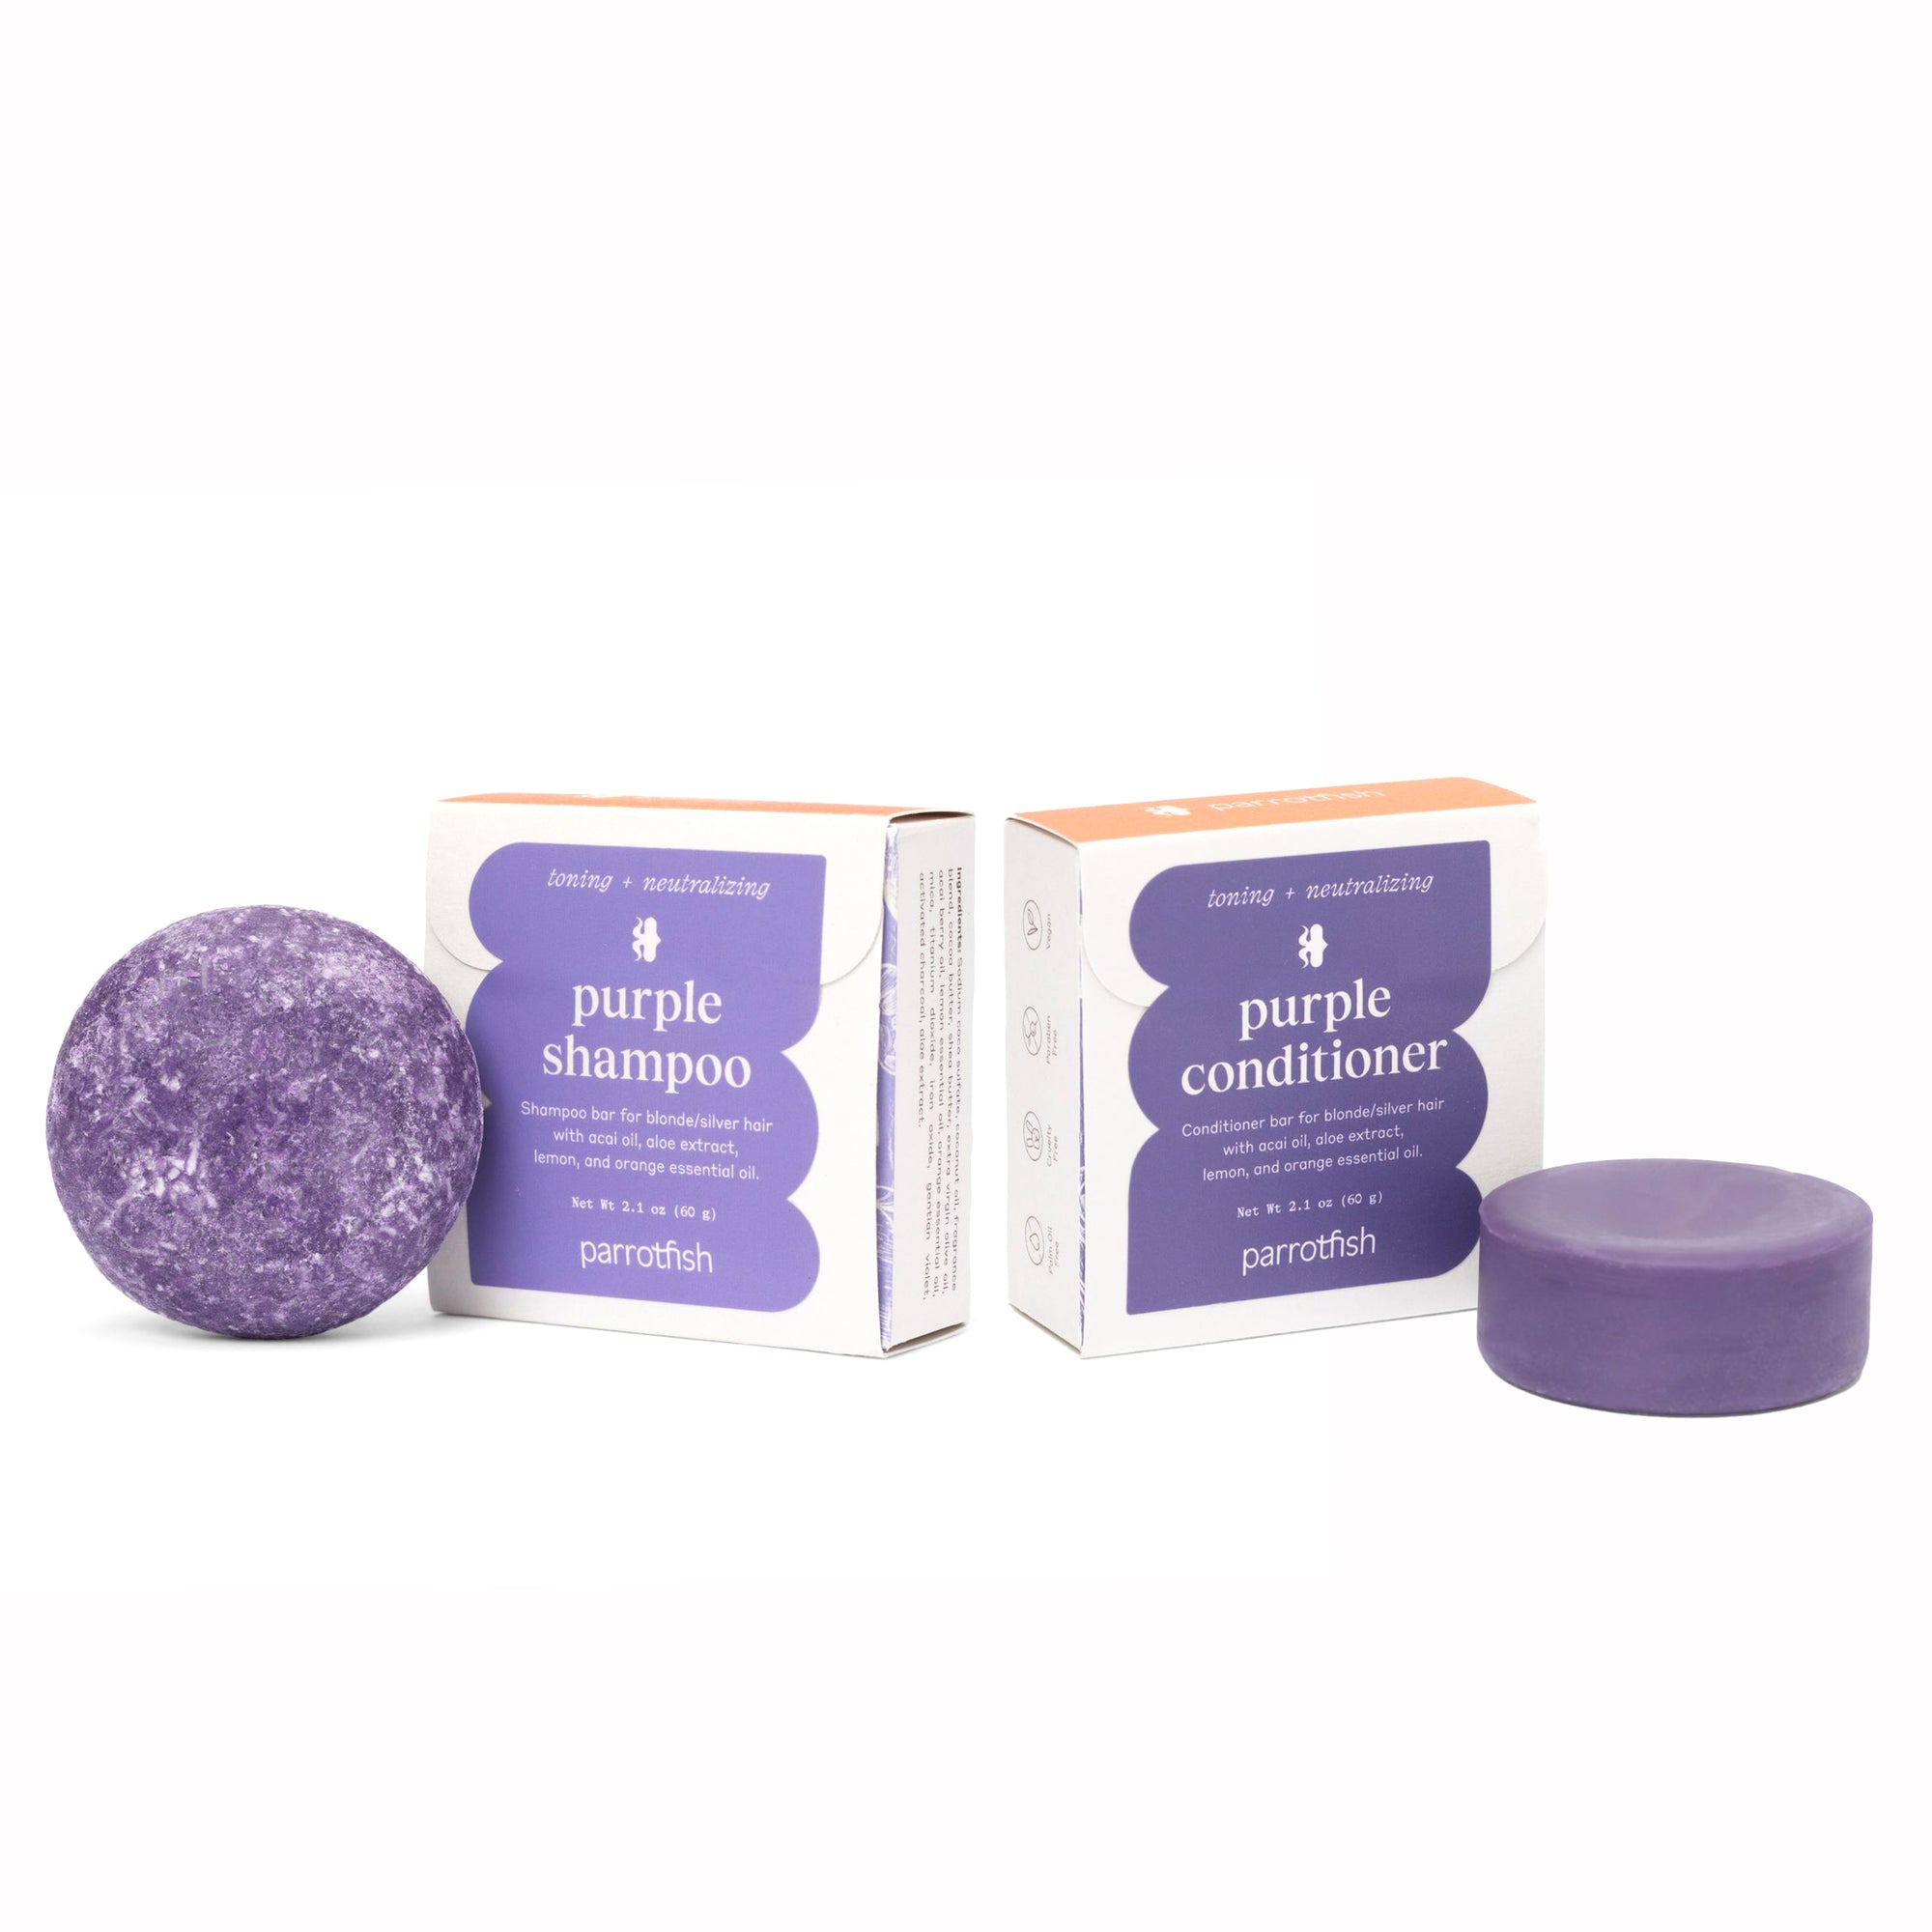 purple shampoo and conditioner - Parrotfish